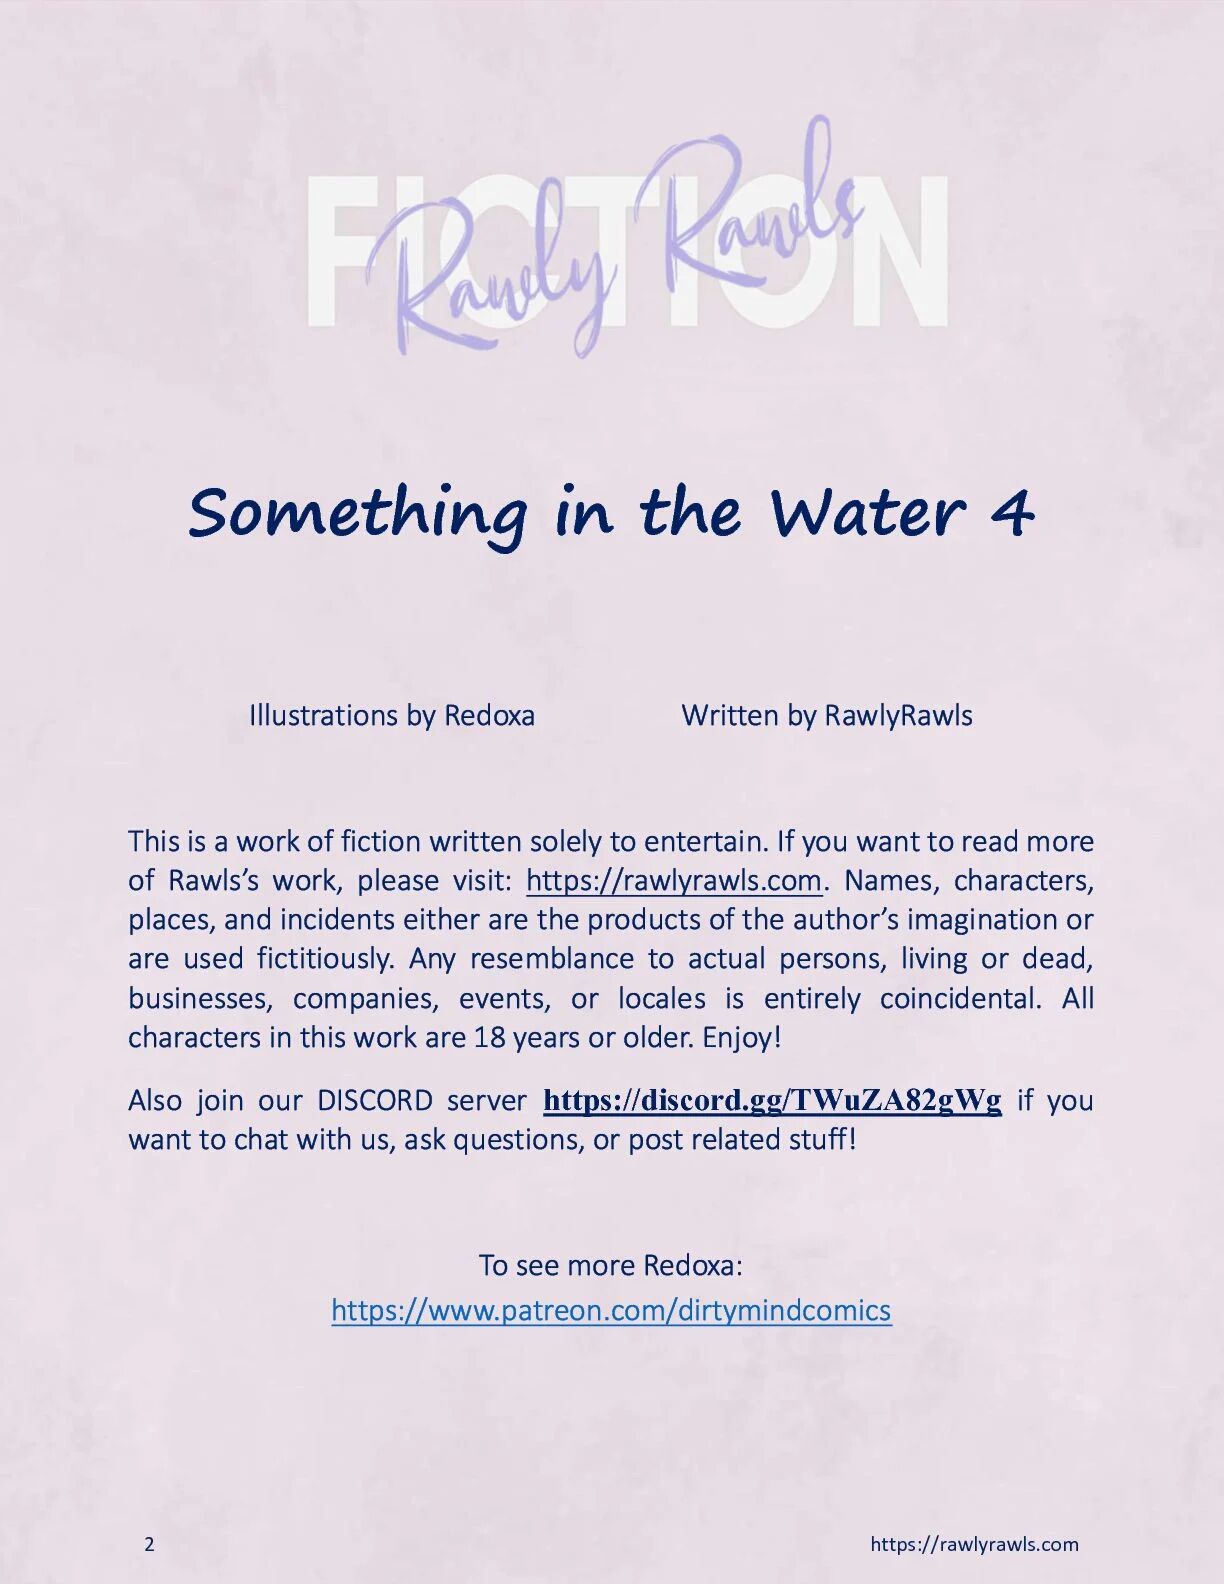 There's Something in the Water [Redoxa , RawlyRawls] - 4 - english 2